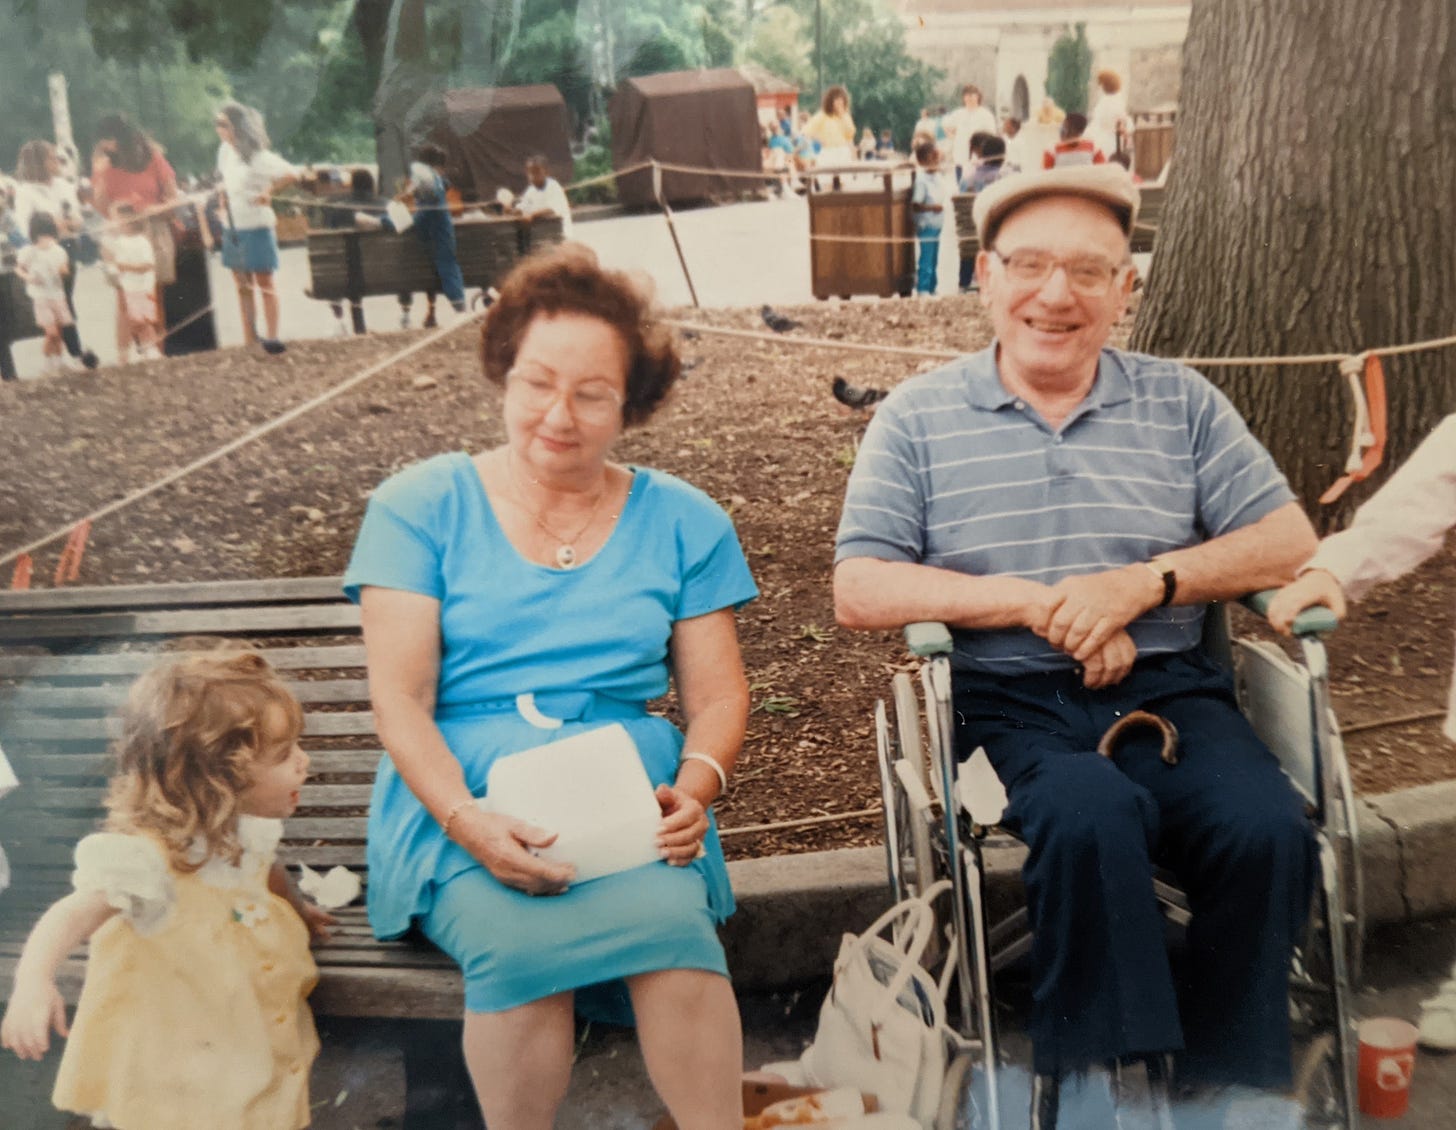 My grandpa in his wheelchair